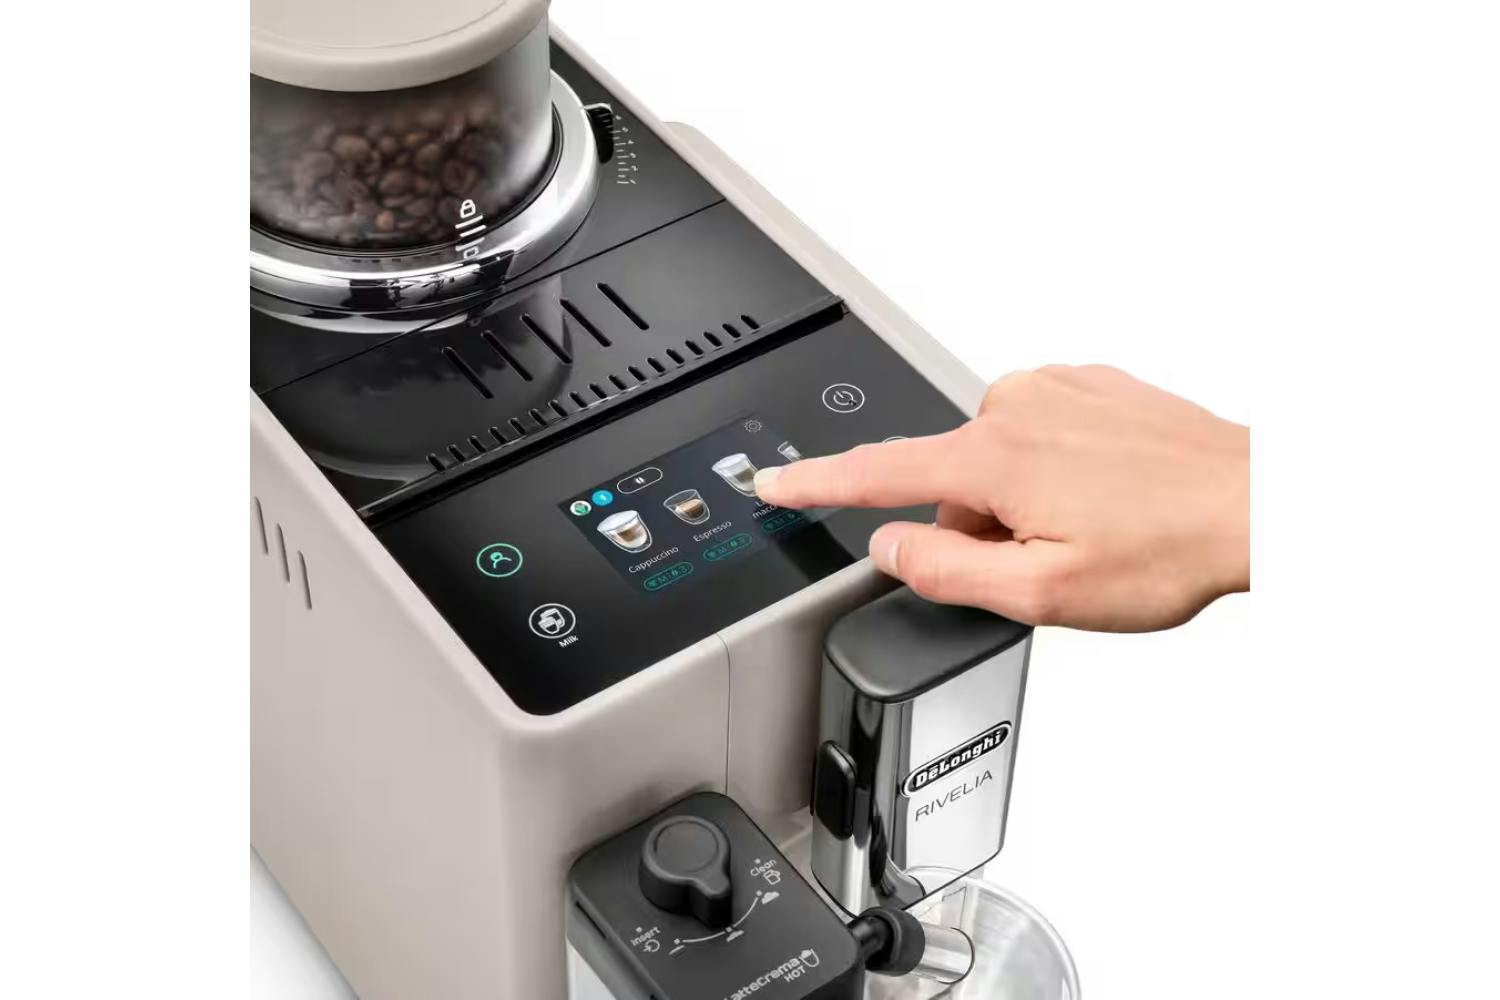 DeLonghi Rivelia Automatic Compact Bean to Cup Coffee Machine, EXAM440.55.BG, Sand Beige